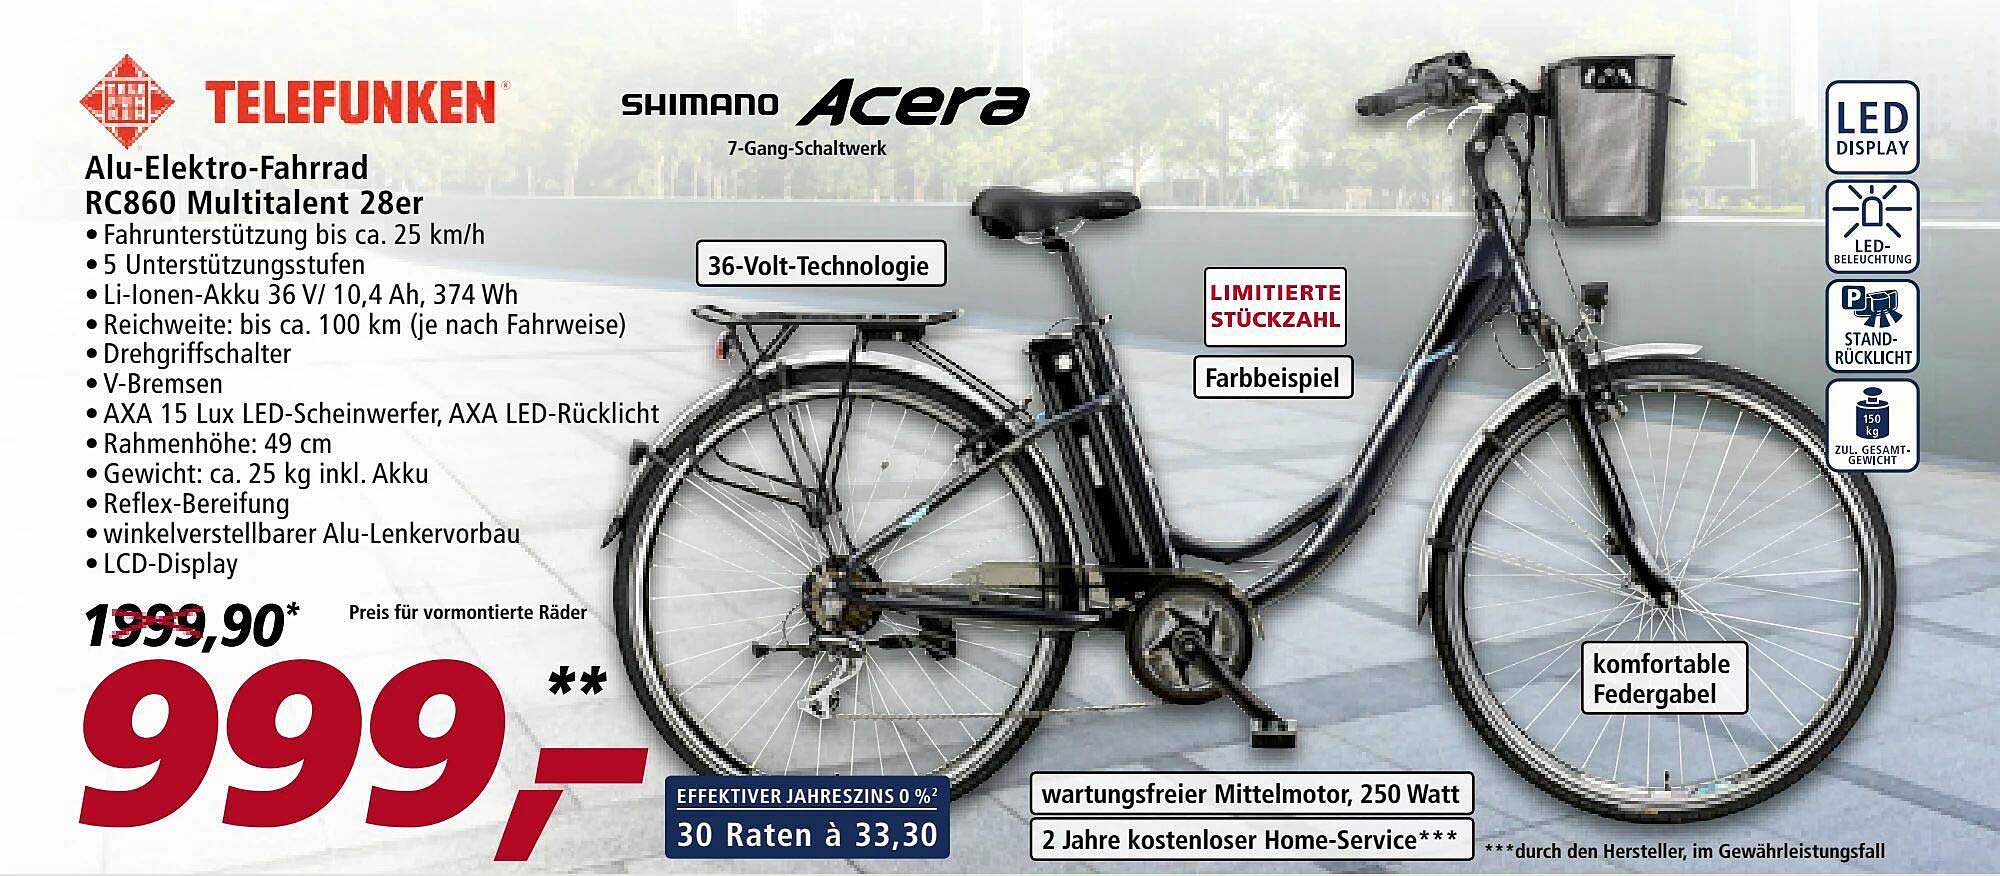 Telefunken Alu-elektro-fahrrad RC860 Multitalent 28er Angebot bei